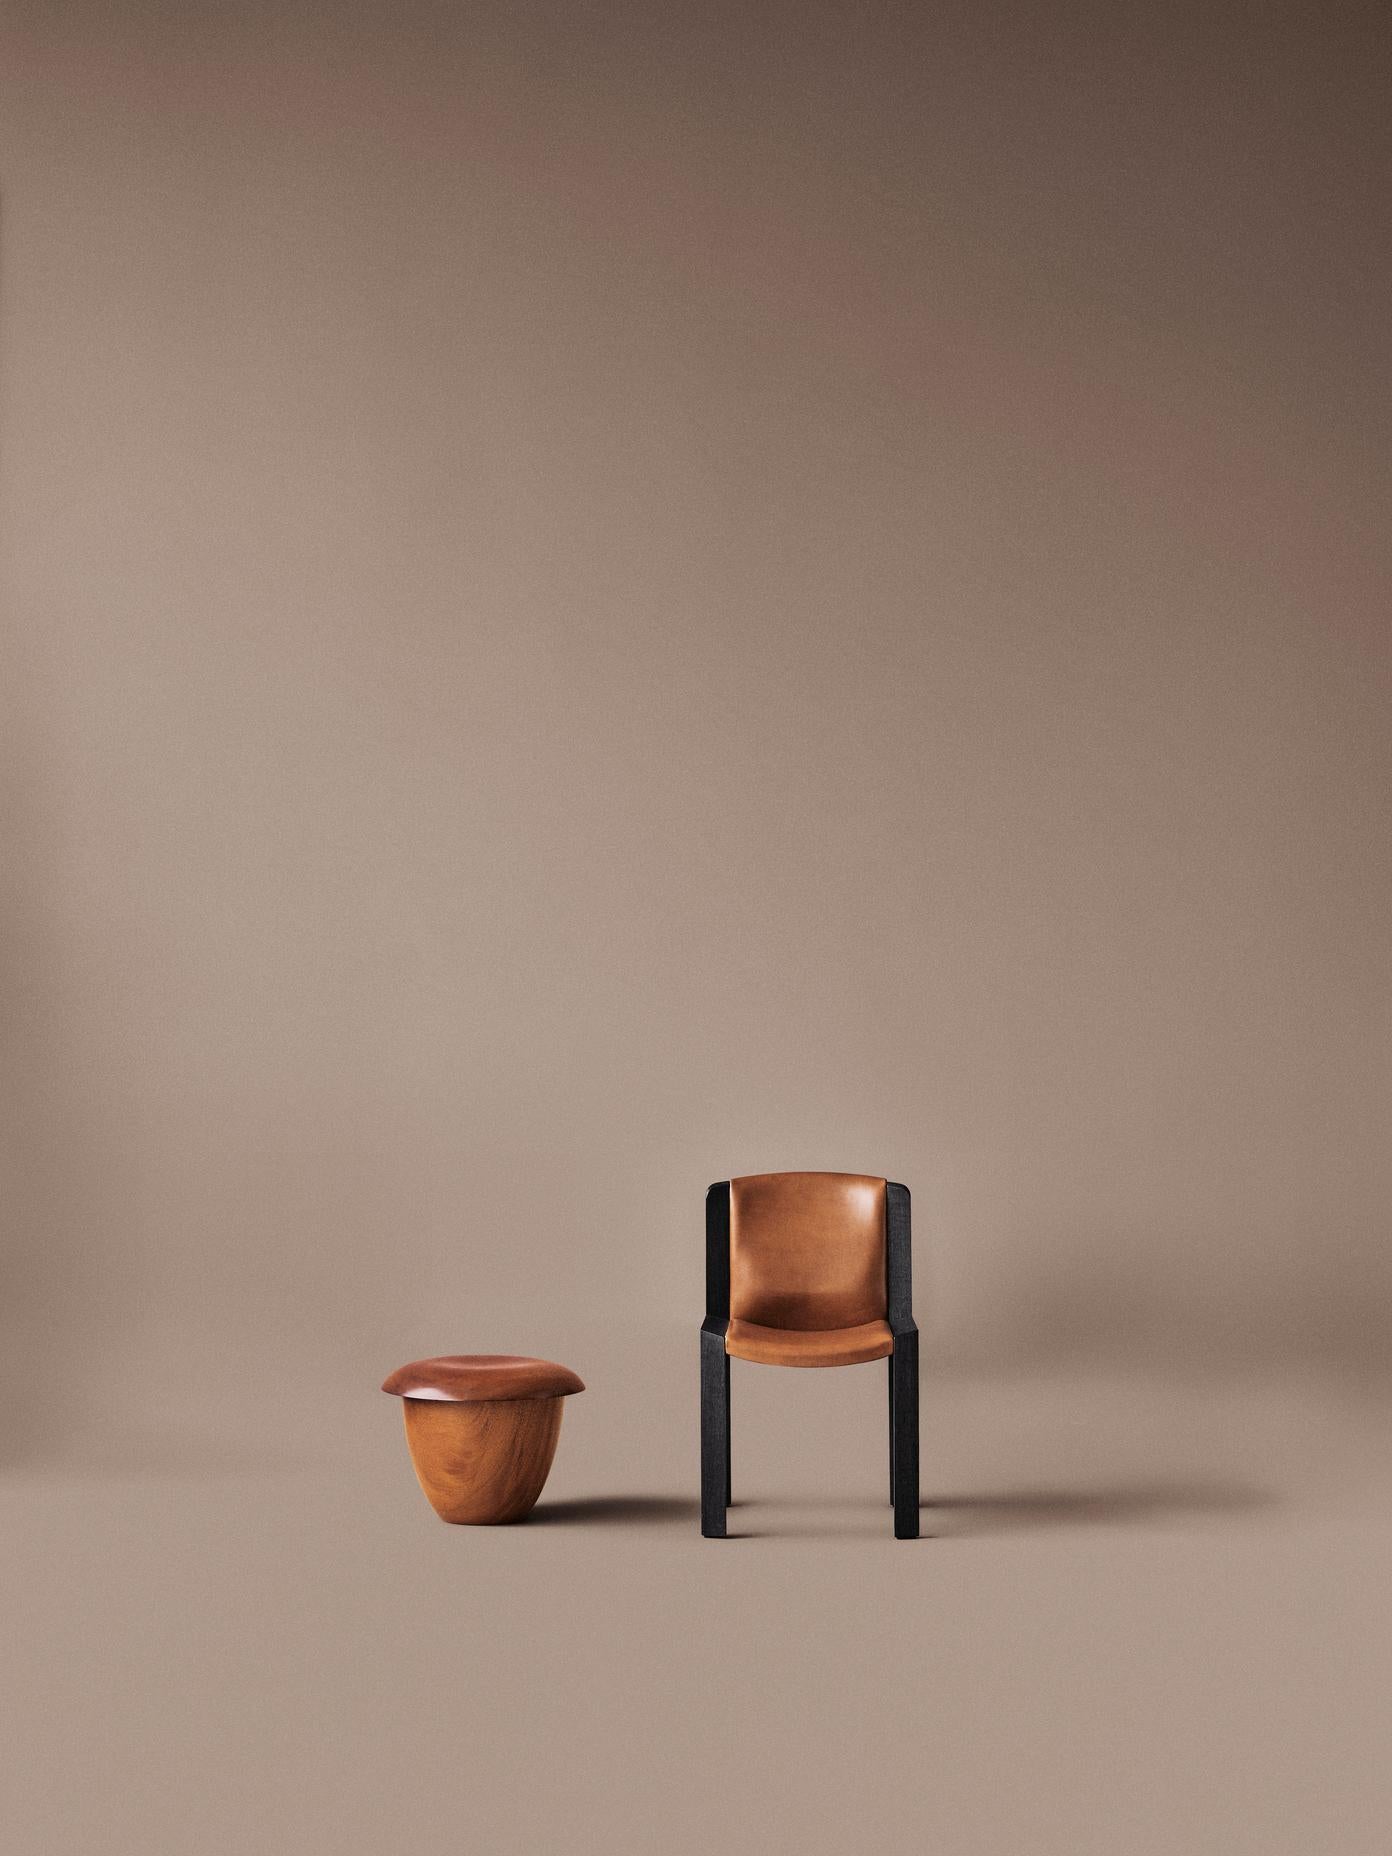 Joe Colombo 'Chair 300' Wood and Sørensen Leather by Karakter 1